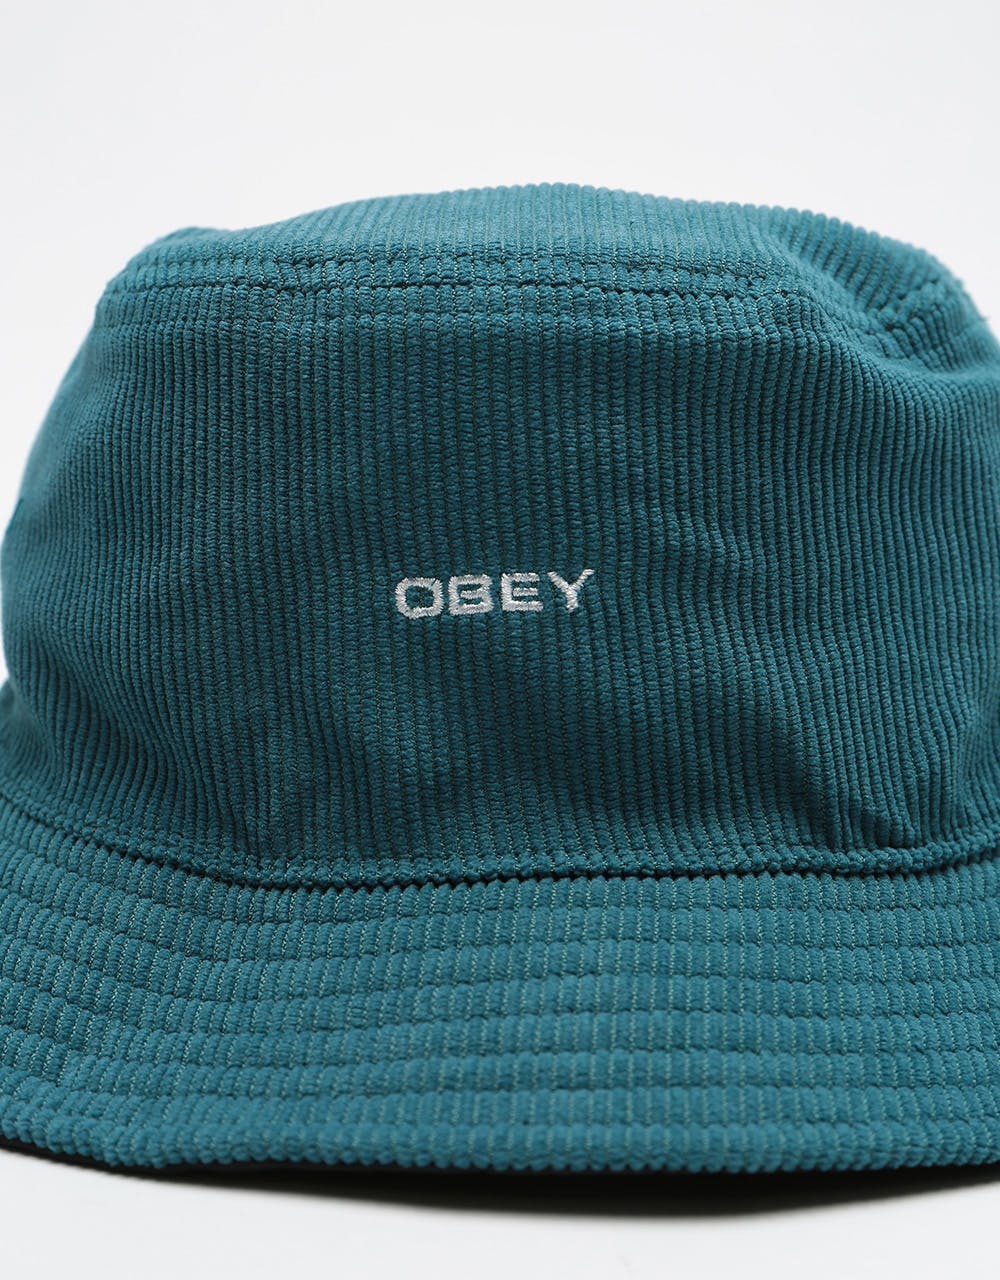 Obey Icon Reversible Bucket Hat - Black/Multi